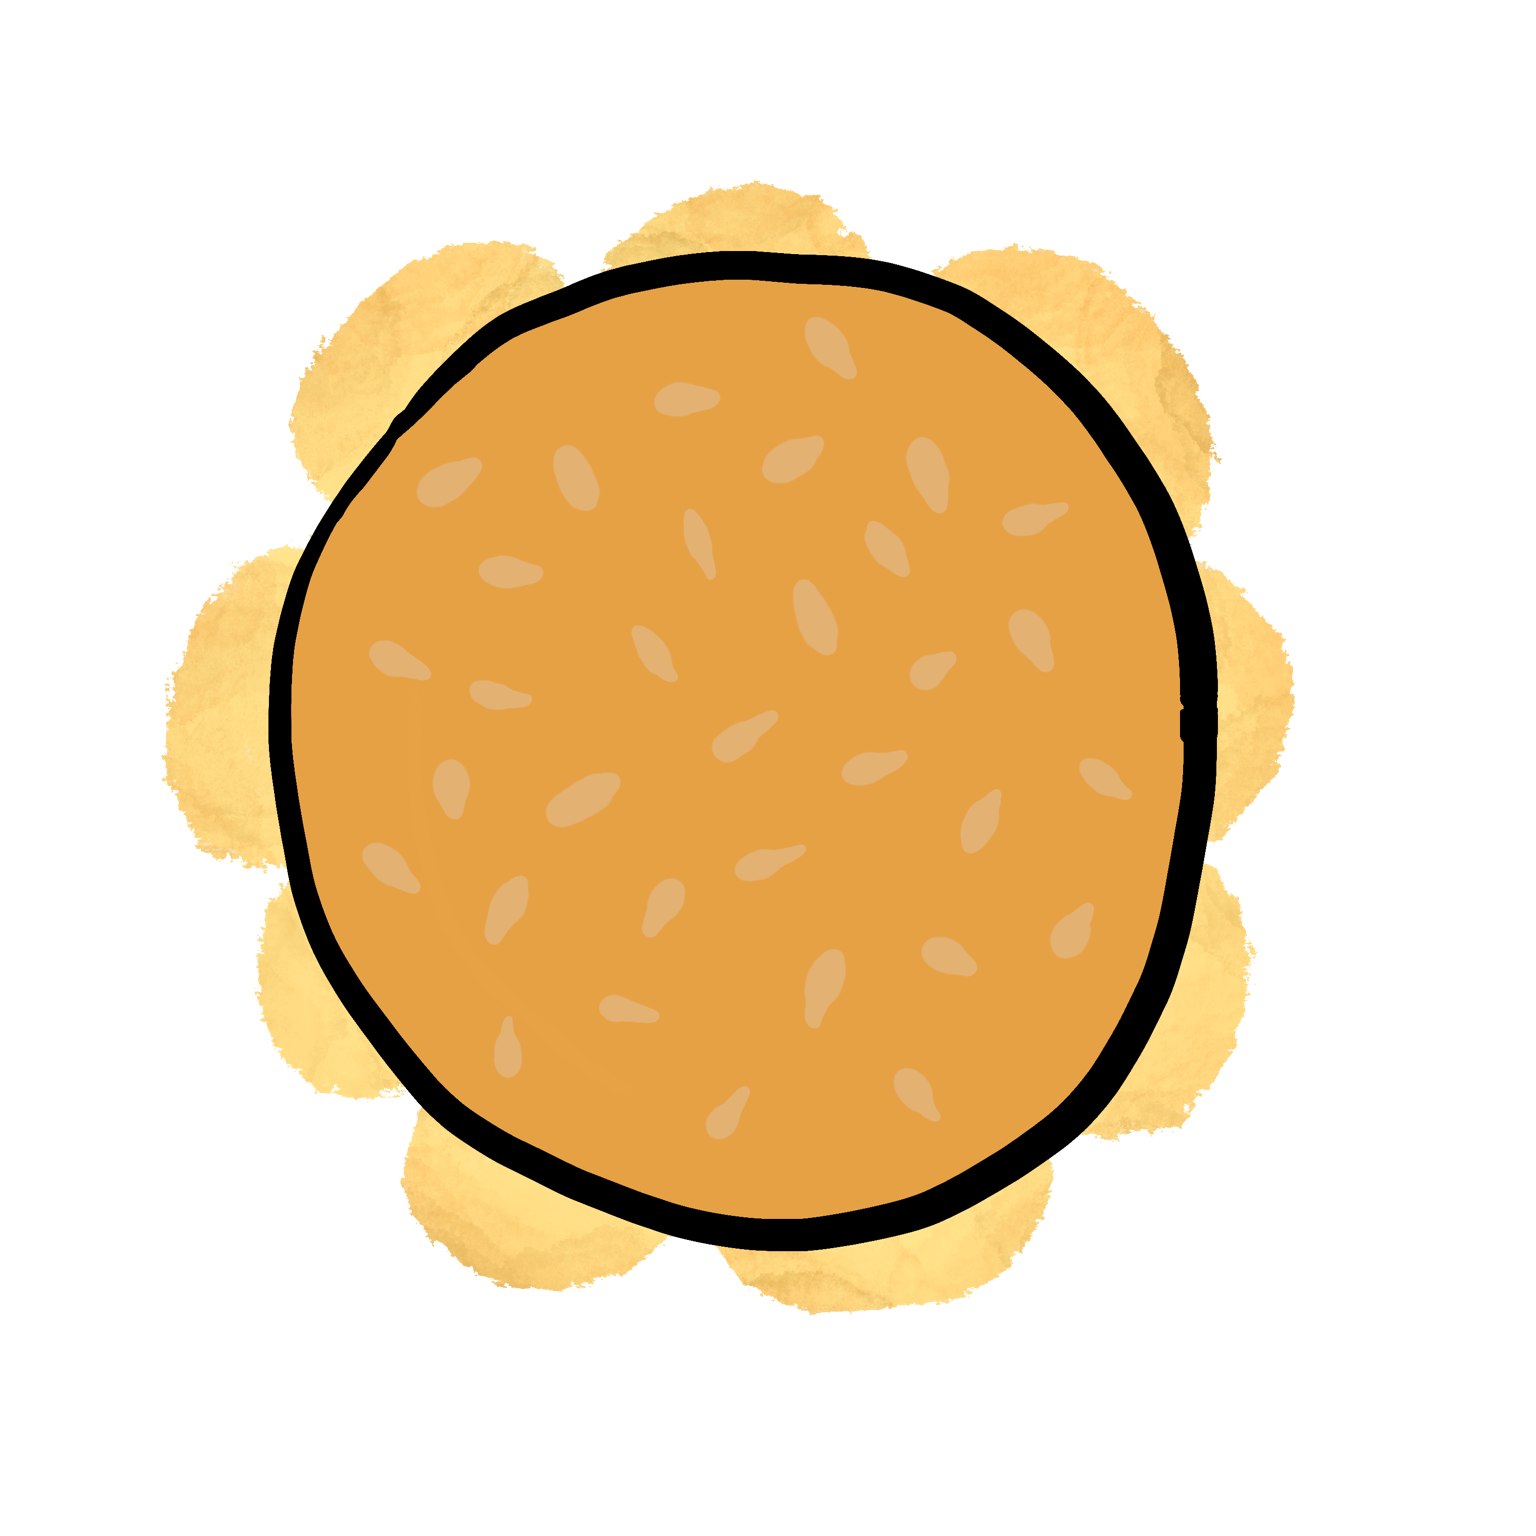 Overhead view of crisps in a sesame seed bun